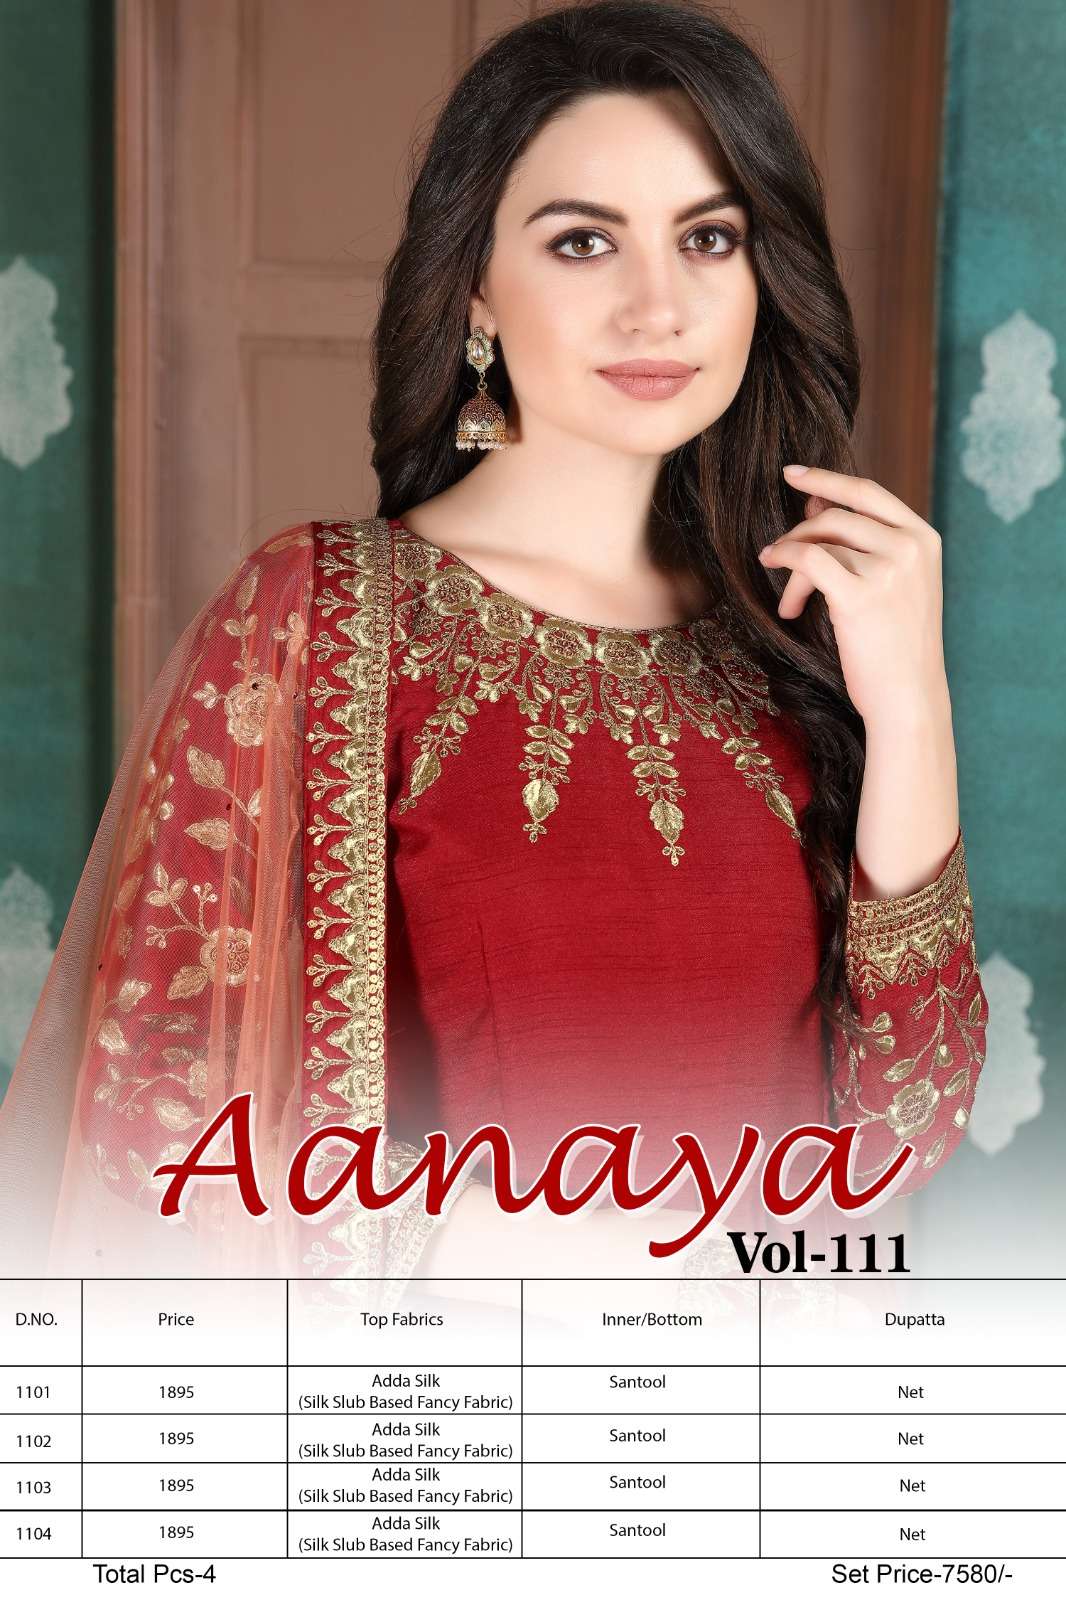 twisha aanaya vol-111 1101-1104 series stylish look designer dress catalogue online market surat